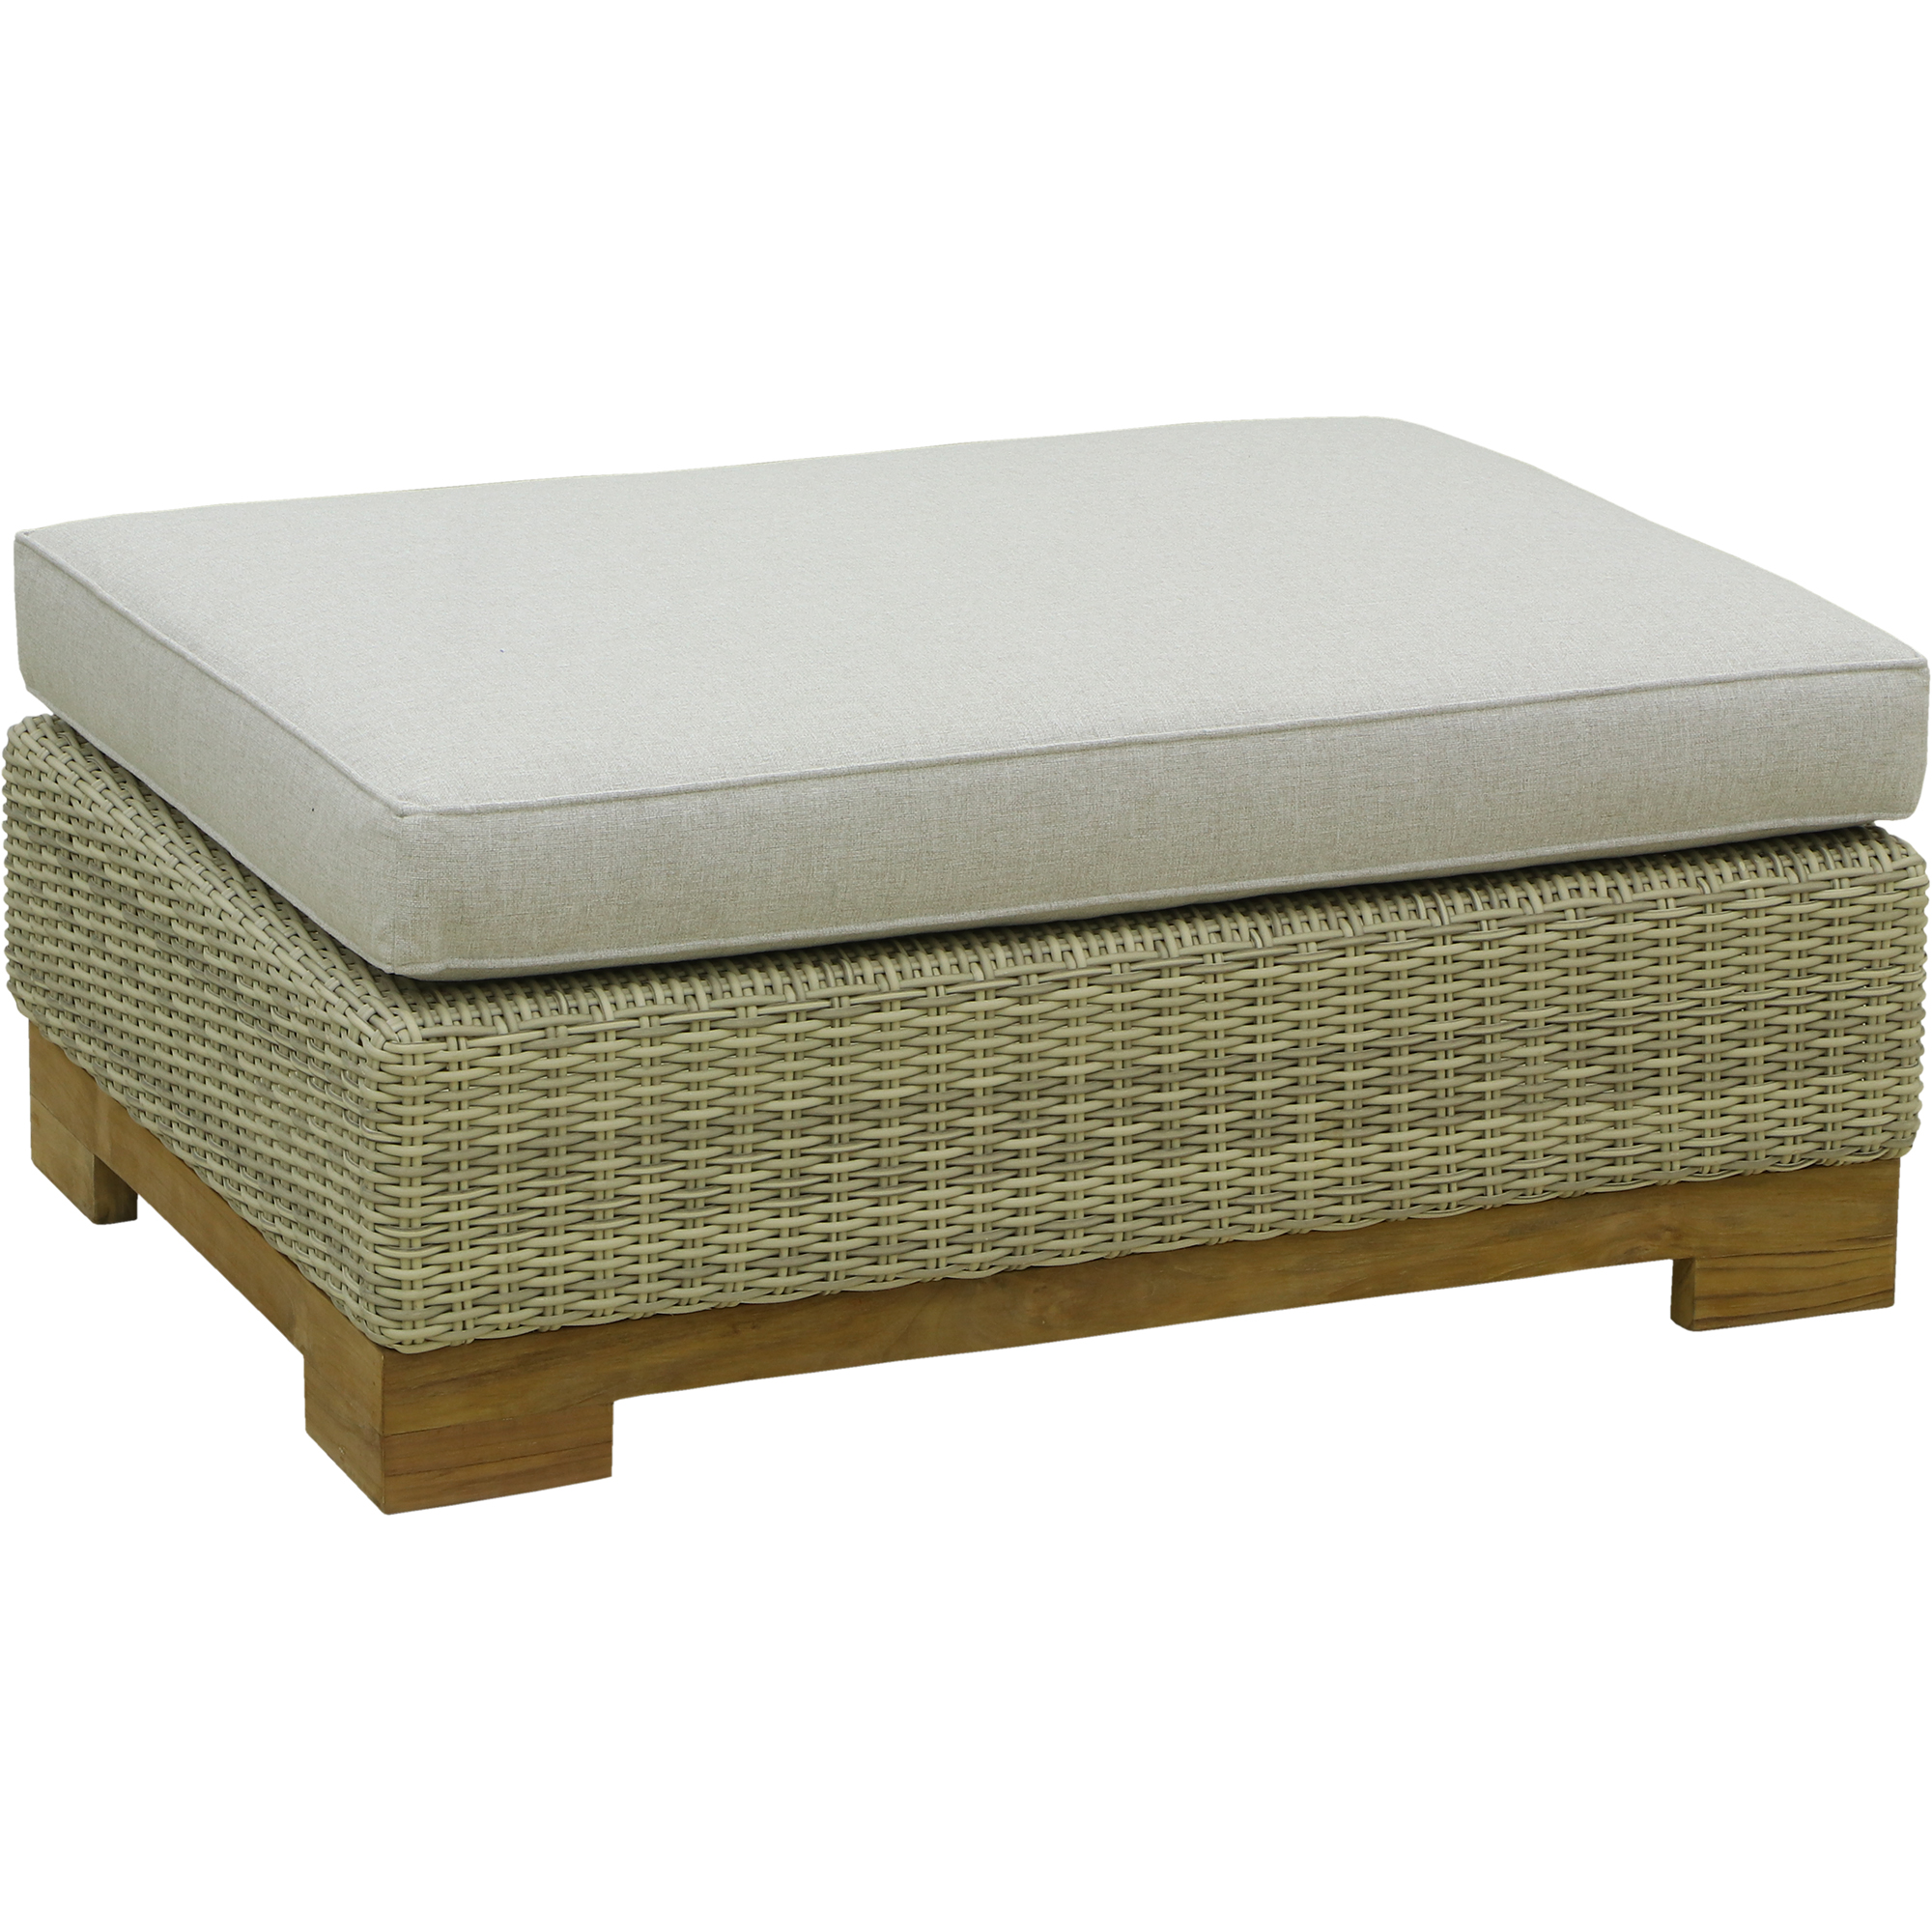 Комплект мебели с подушками Jepara 2 предмета, цвет светло-коричневый, размер 240х90х88 см - фото 5